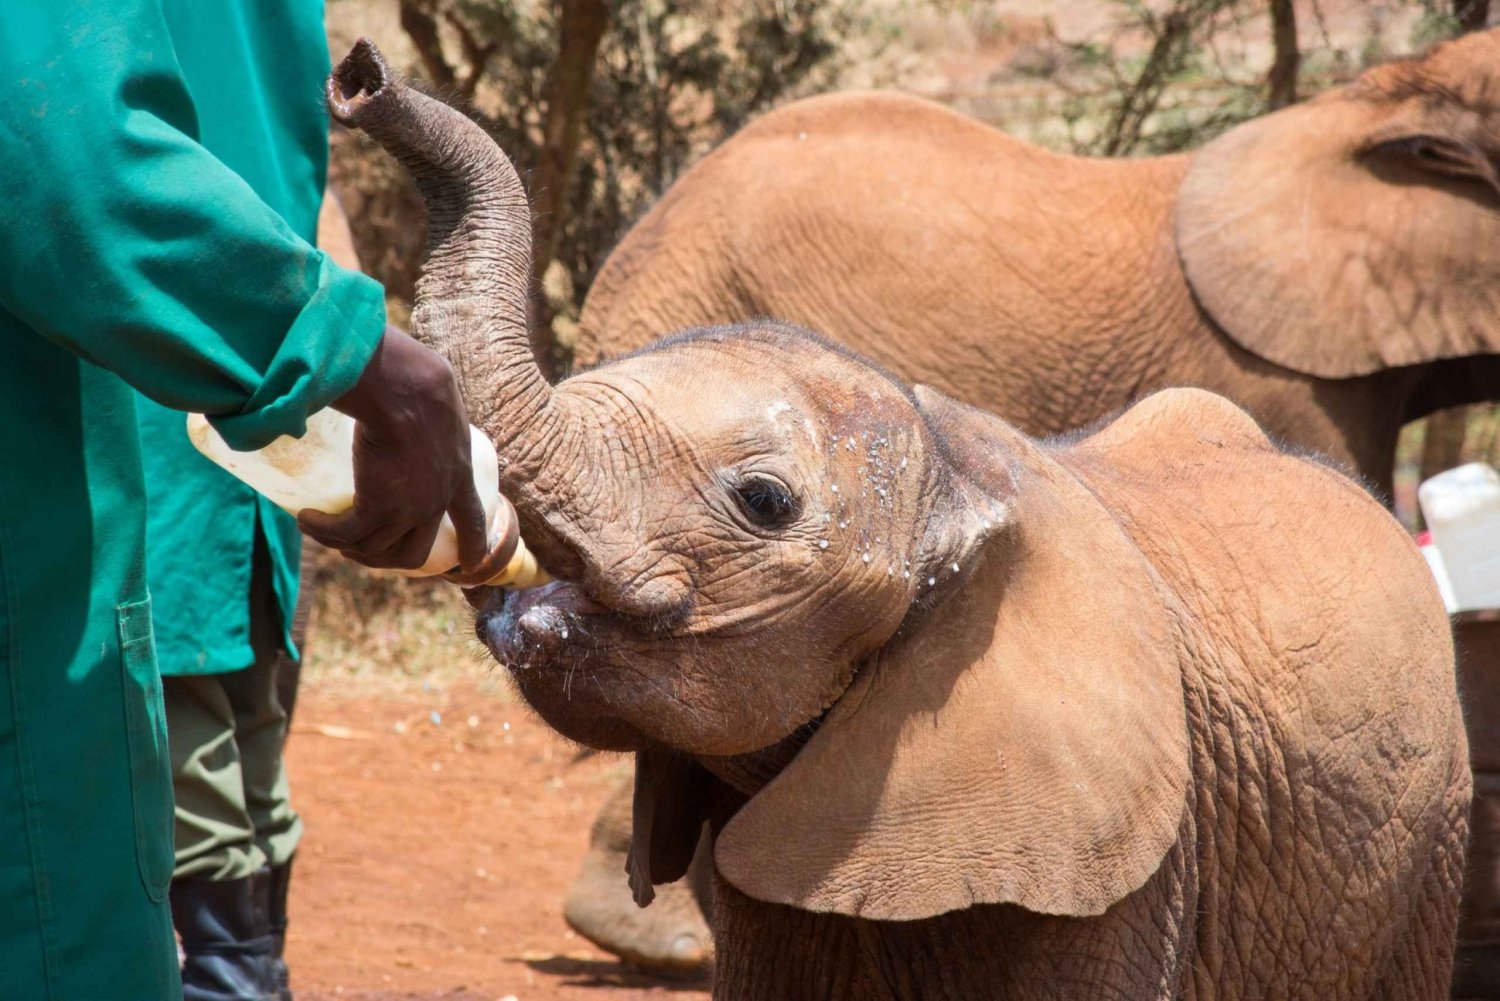 From Nairobi: David Sheldrick Elephant Trust Half Day Tour